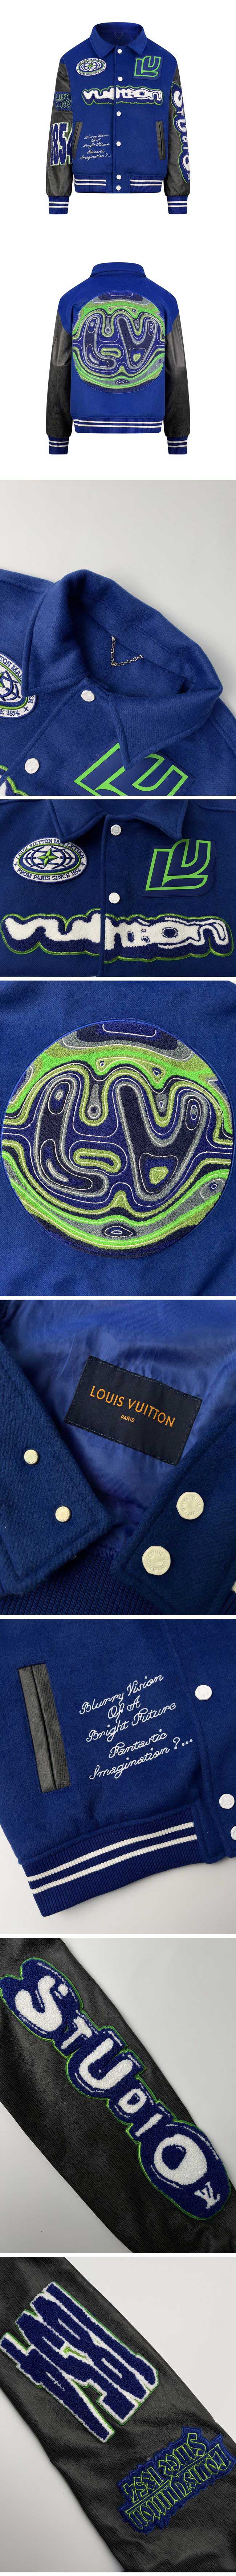 Louis Vuitton Varsity Blue Jacket ルイヴィトン ヴァーシティー ブルー ジャケット